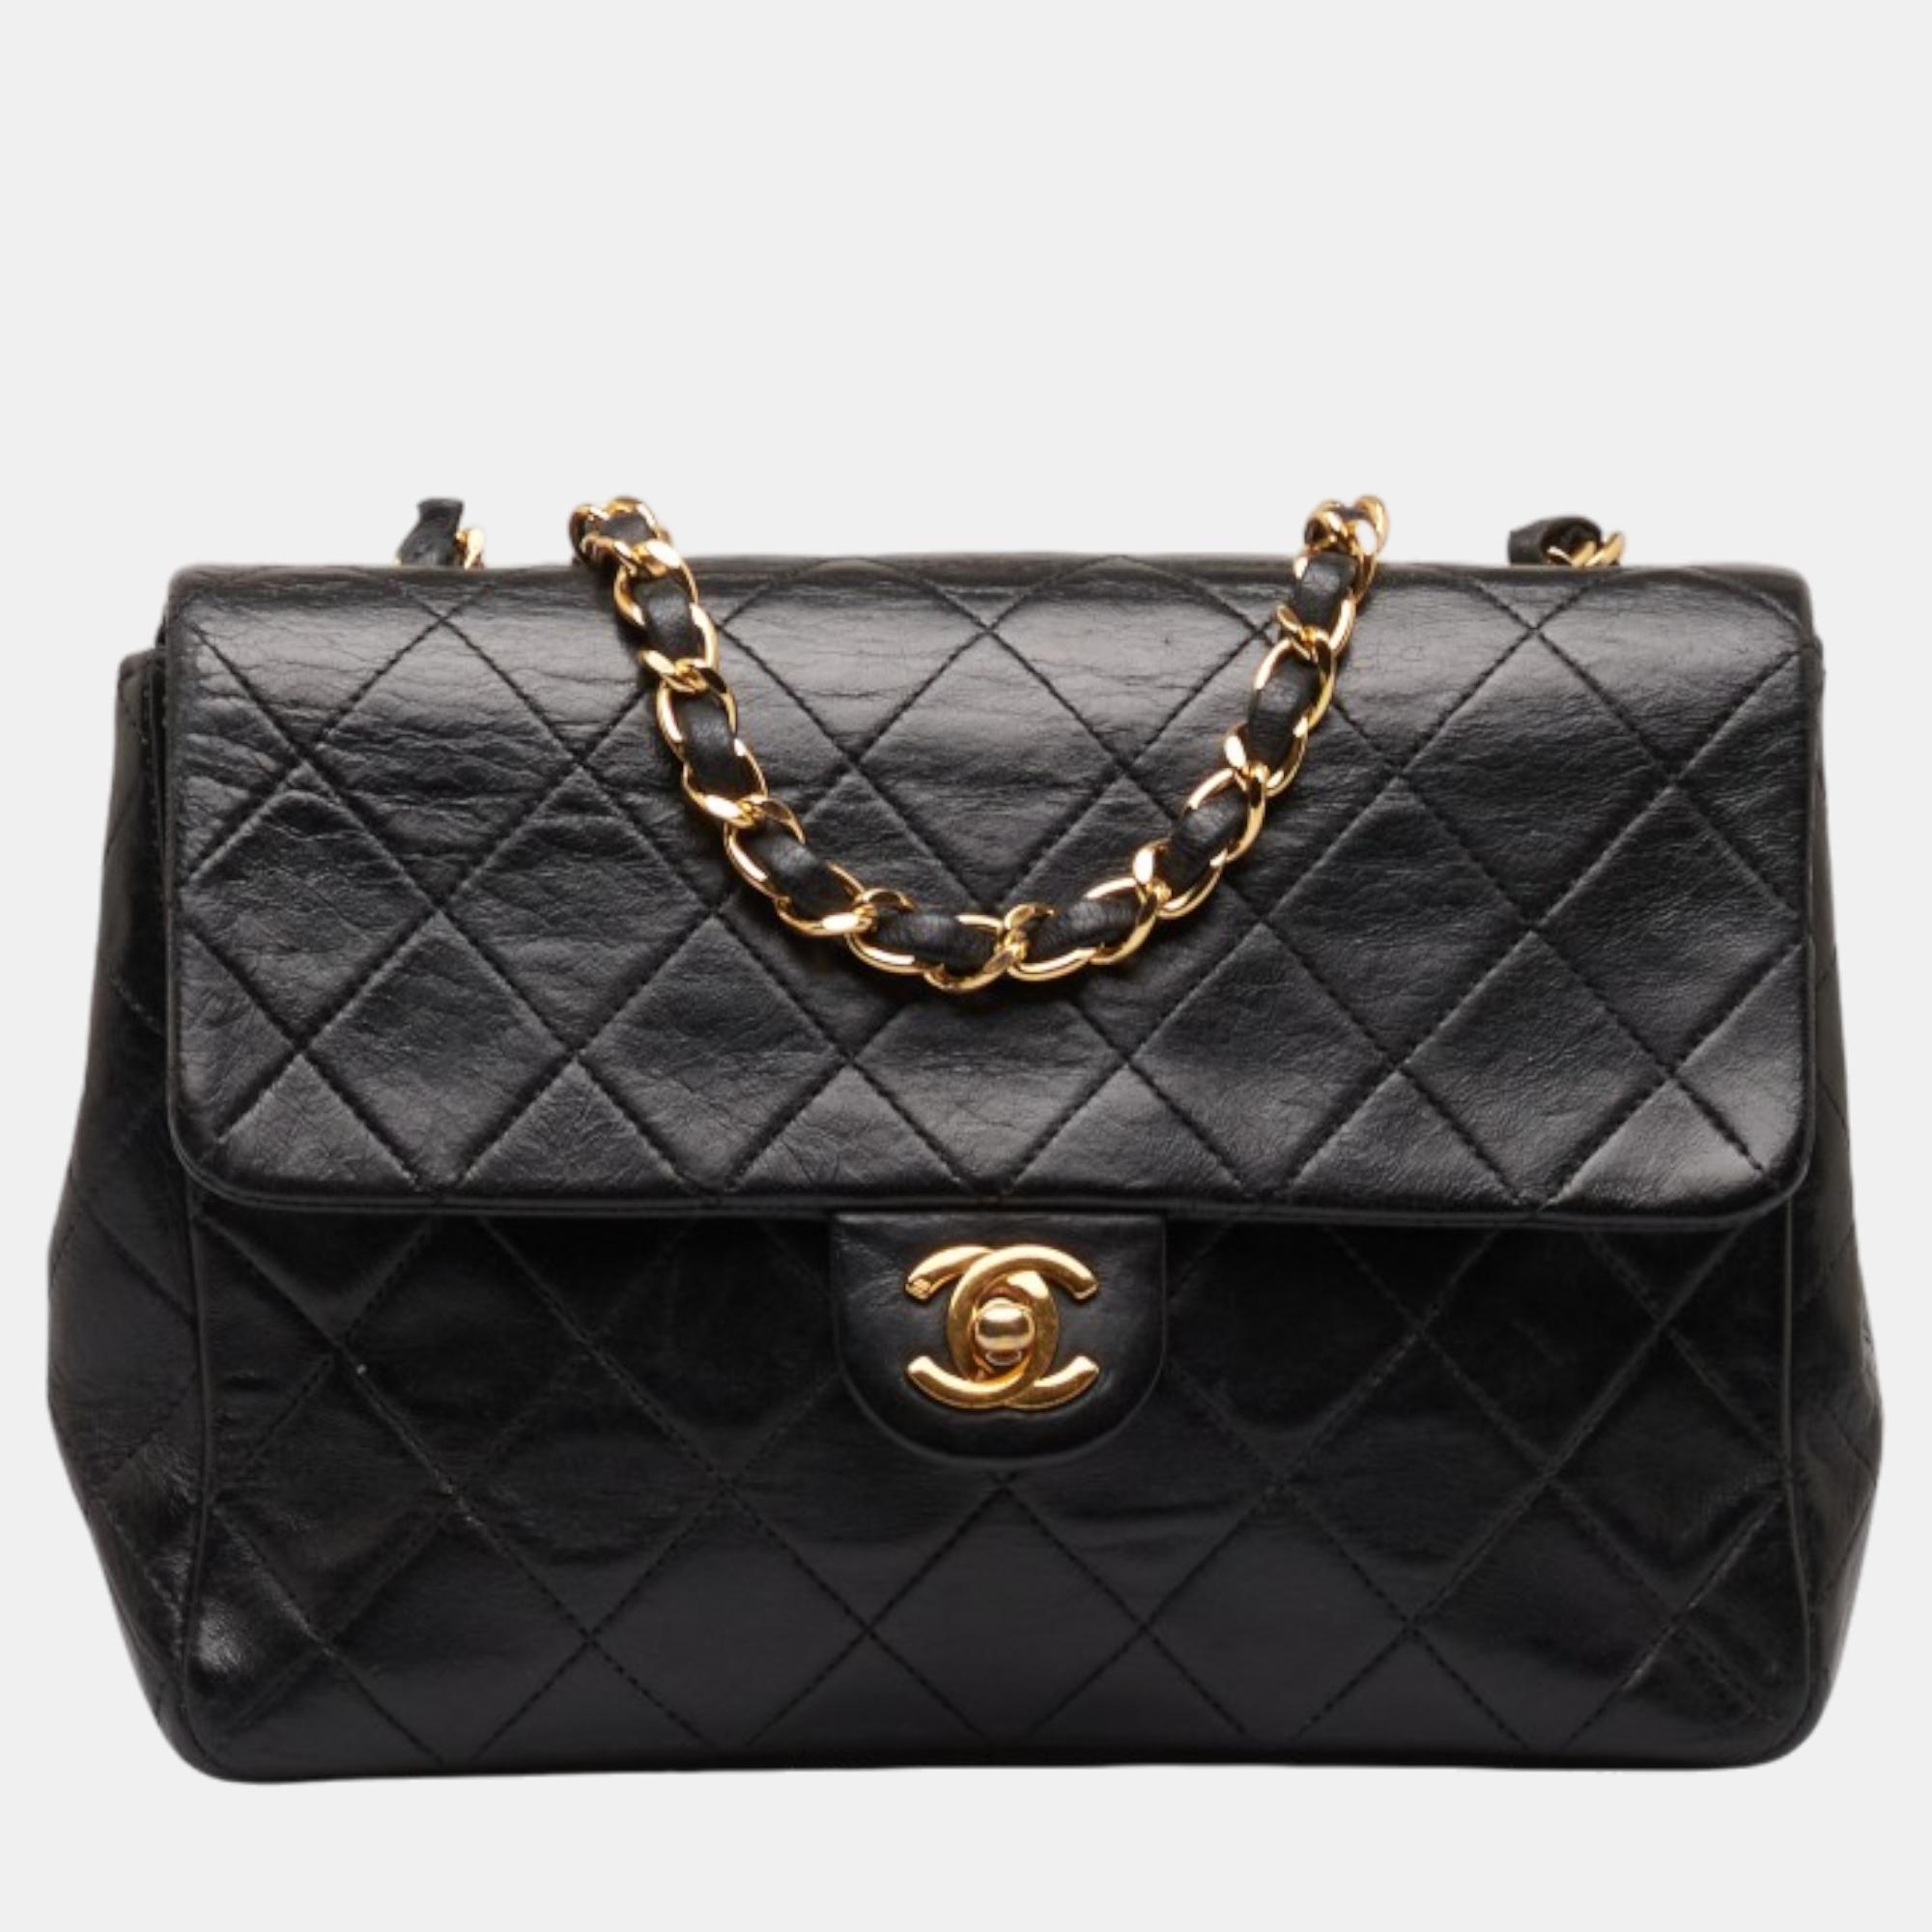 Chanel black leather mini classic square single flap bag